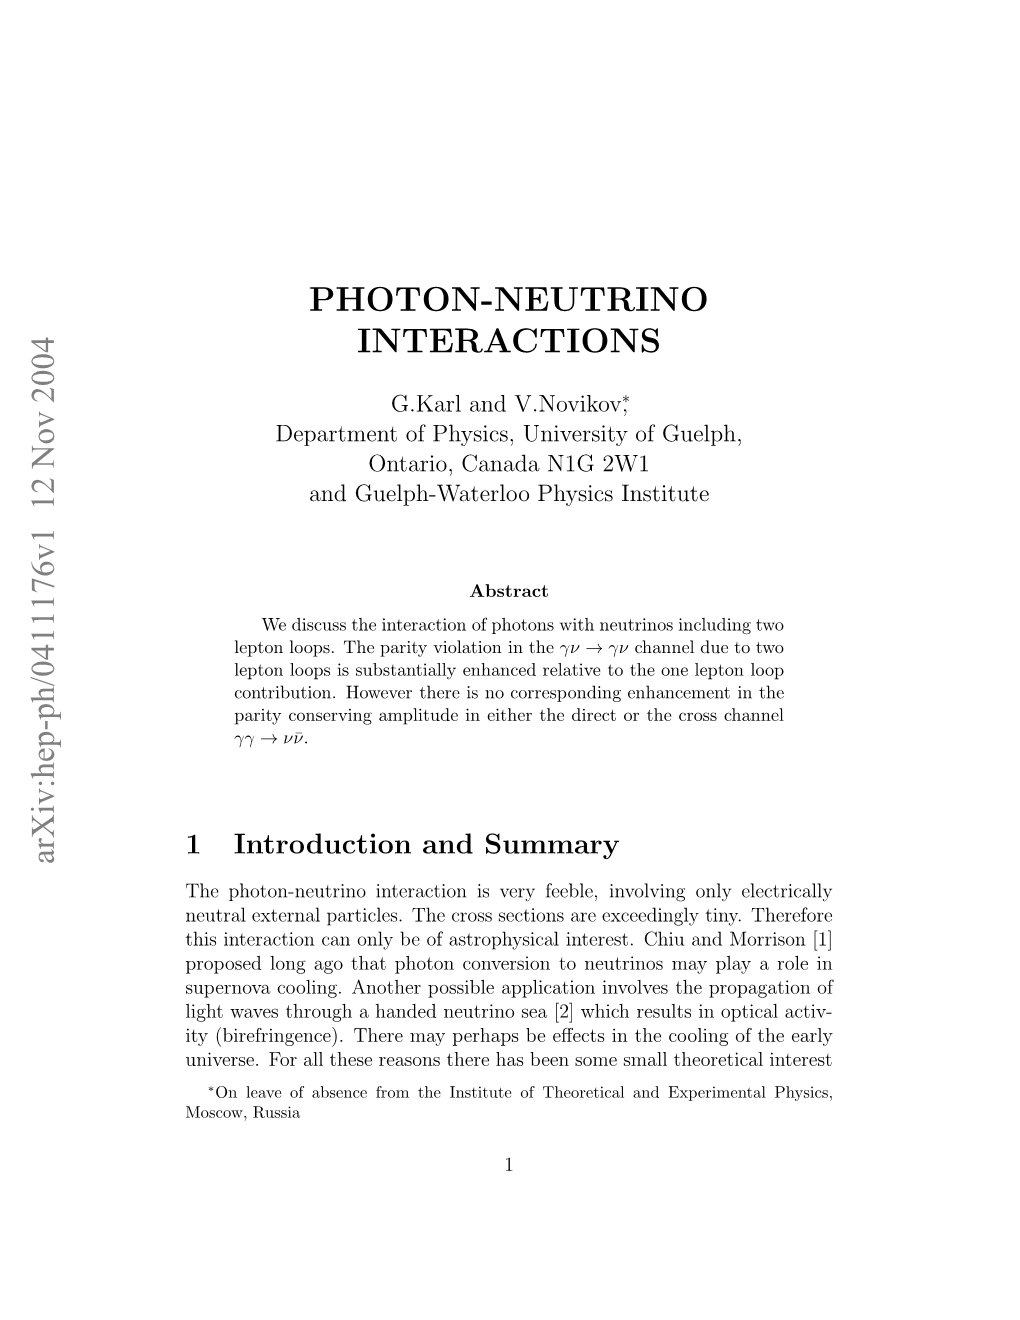 Photon-Neutrino Interactions